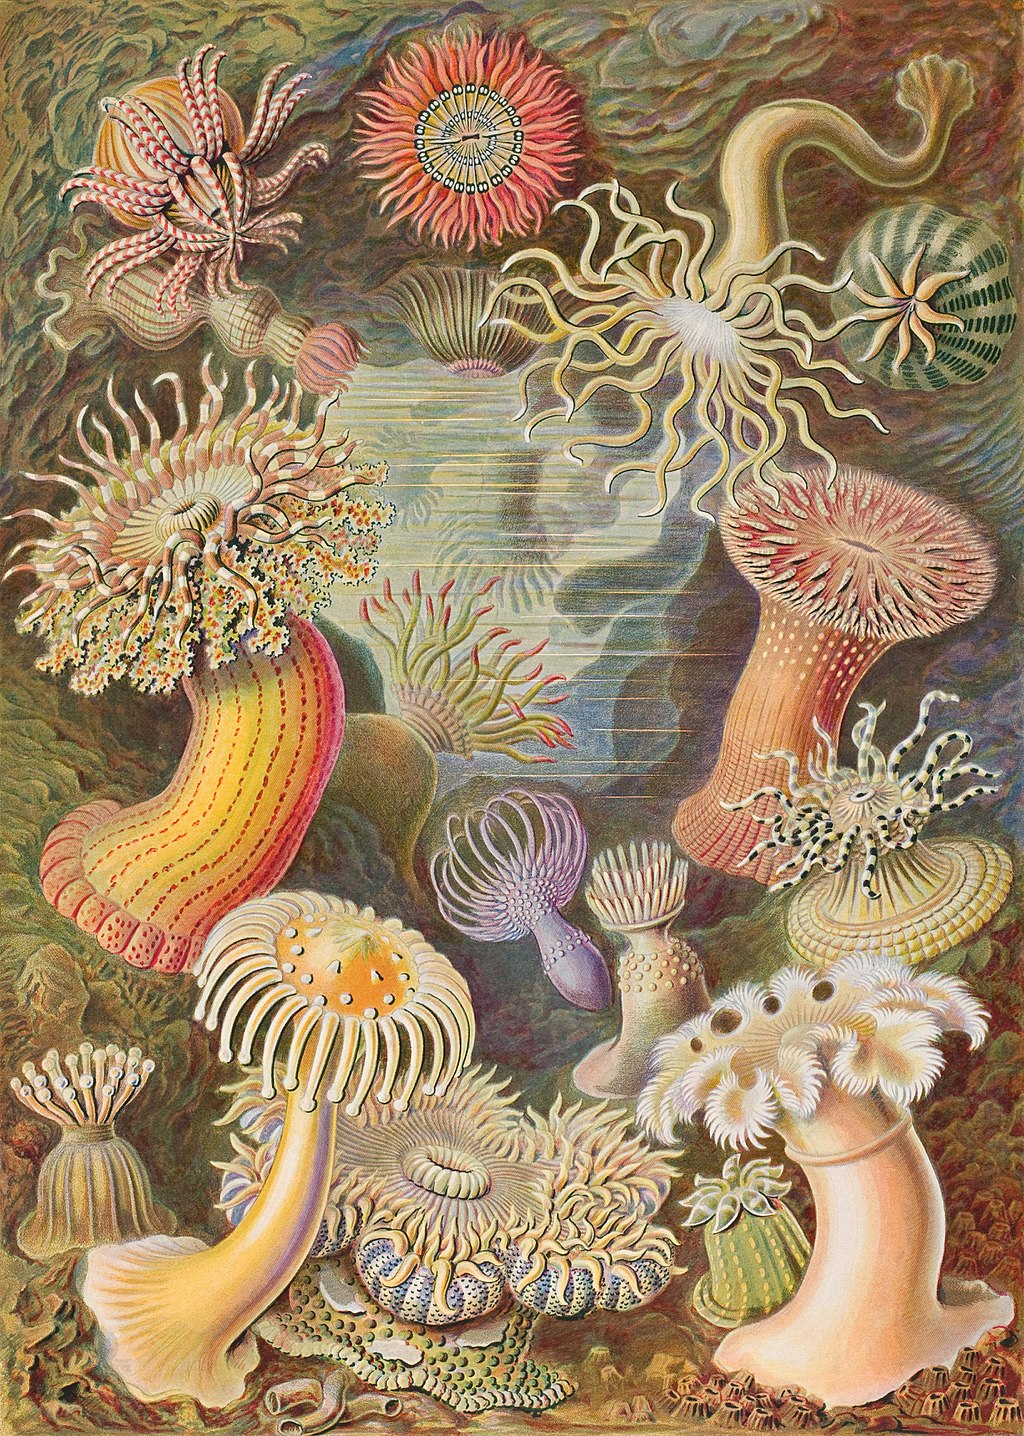 Ernst Haeckel 1904 年的 Kunstformen der Natur 中的第 49 个图版，展示了分类为 Actiniae 的各种海葵。